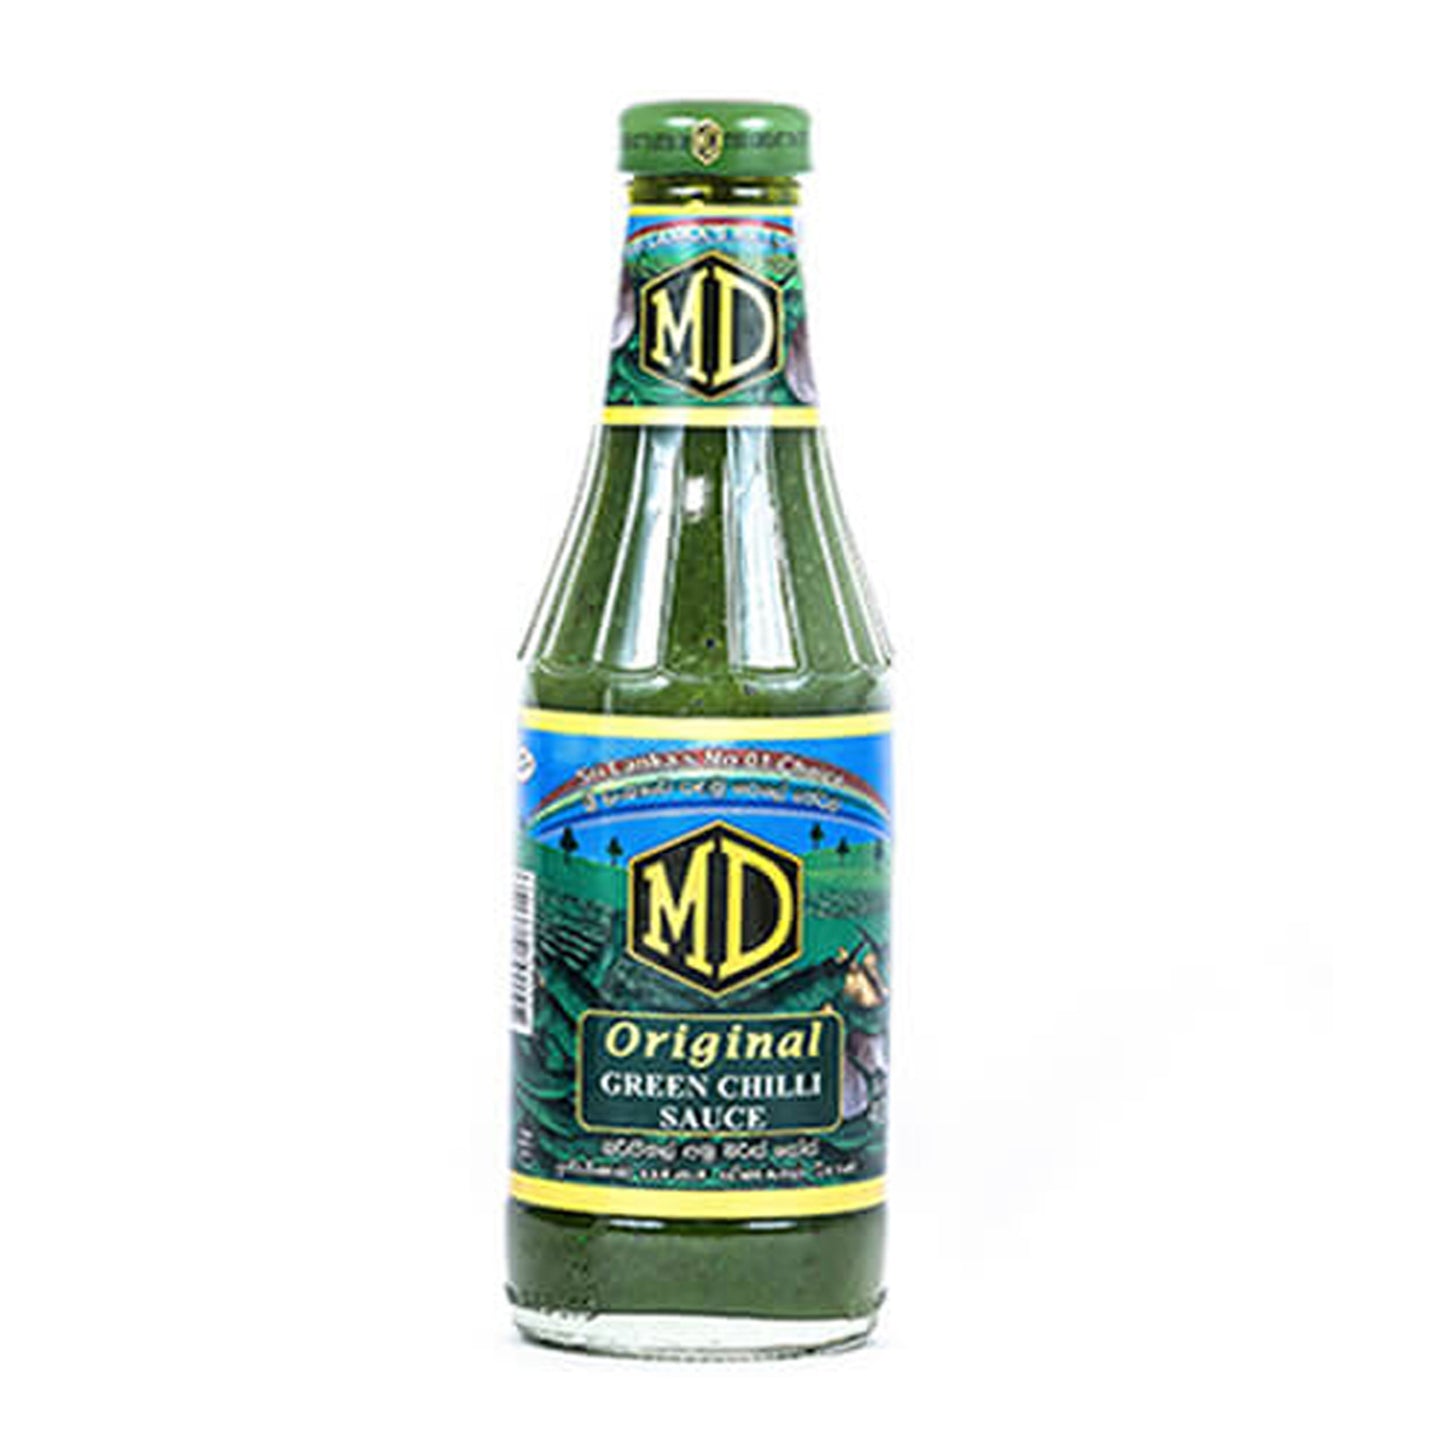 MD grøn chilisauce (400 g)